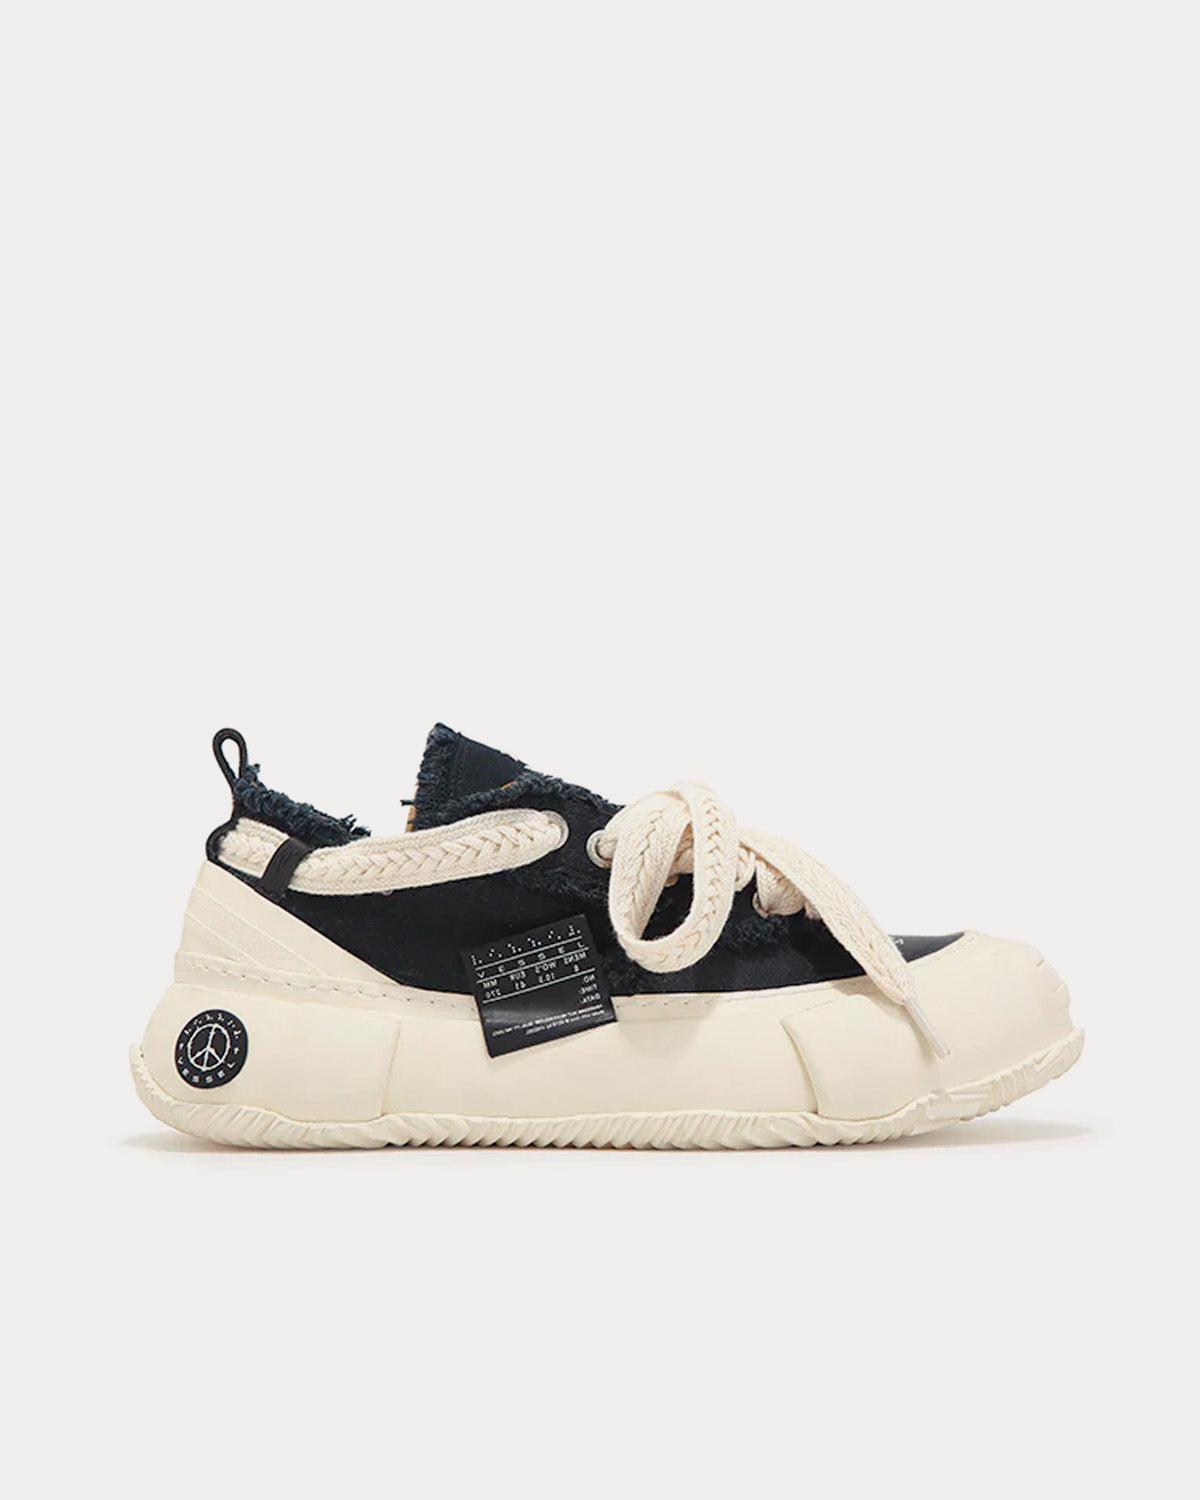 G.O.P. 2.0 Marshmallow Black / White Low Top Sneakers